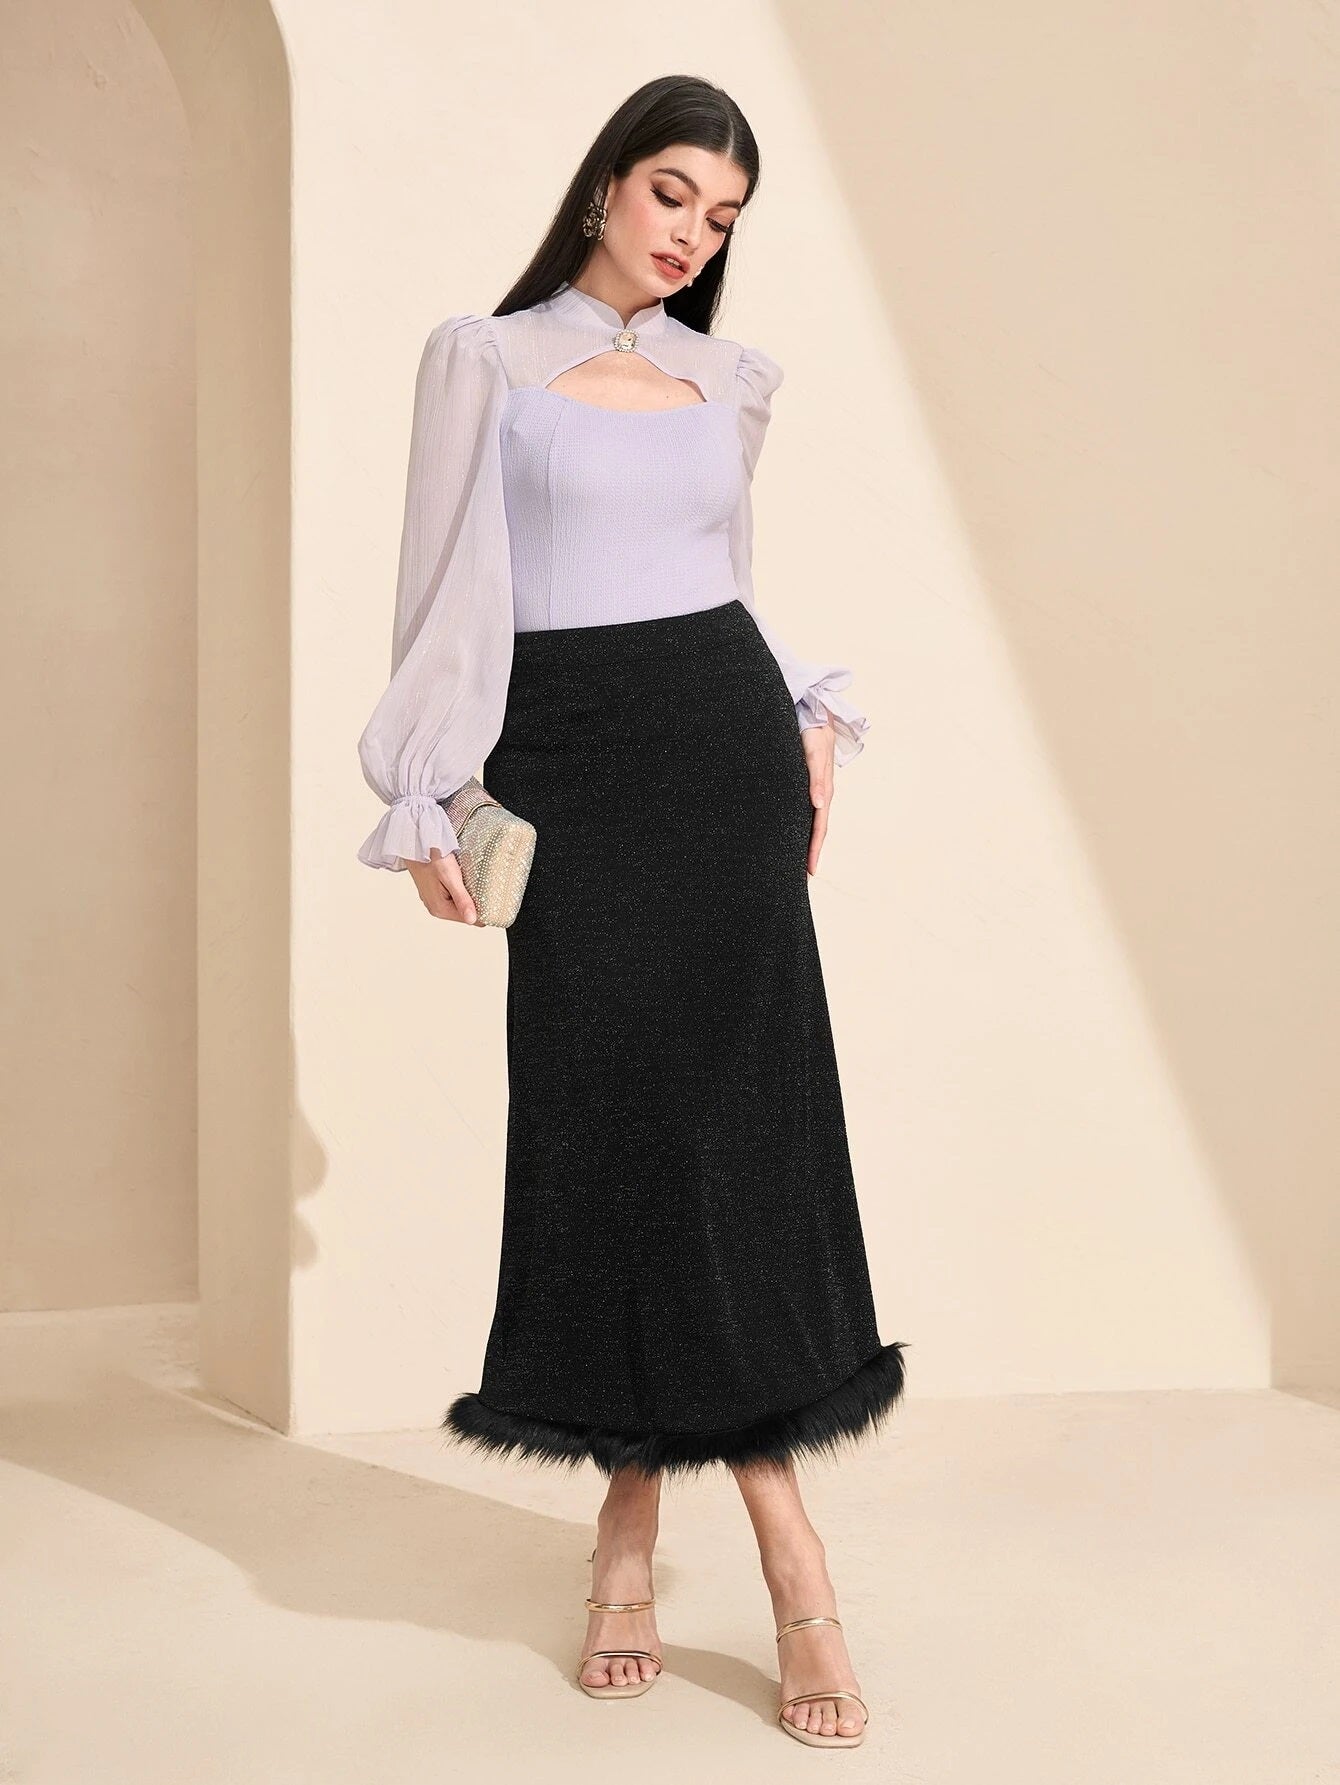 CM-BS610801 Women Casual Seoul Style High Waist Fuzzy Hem Glitter Skirt - Black